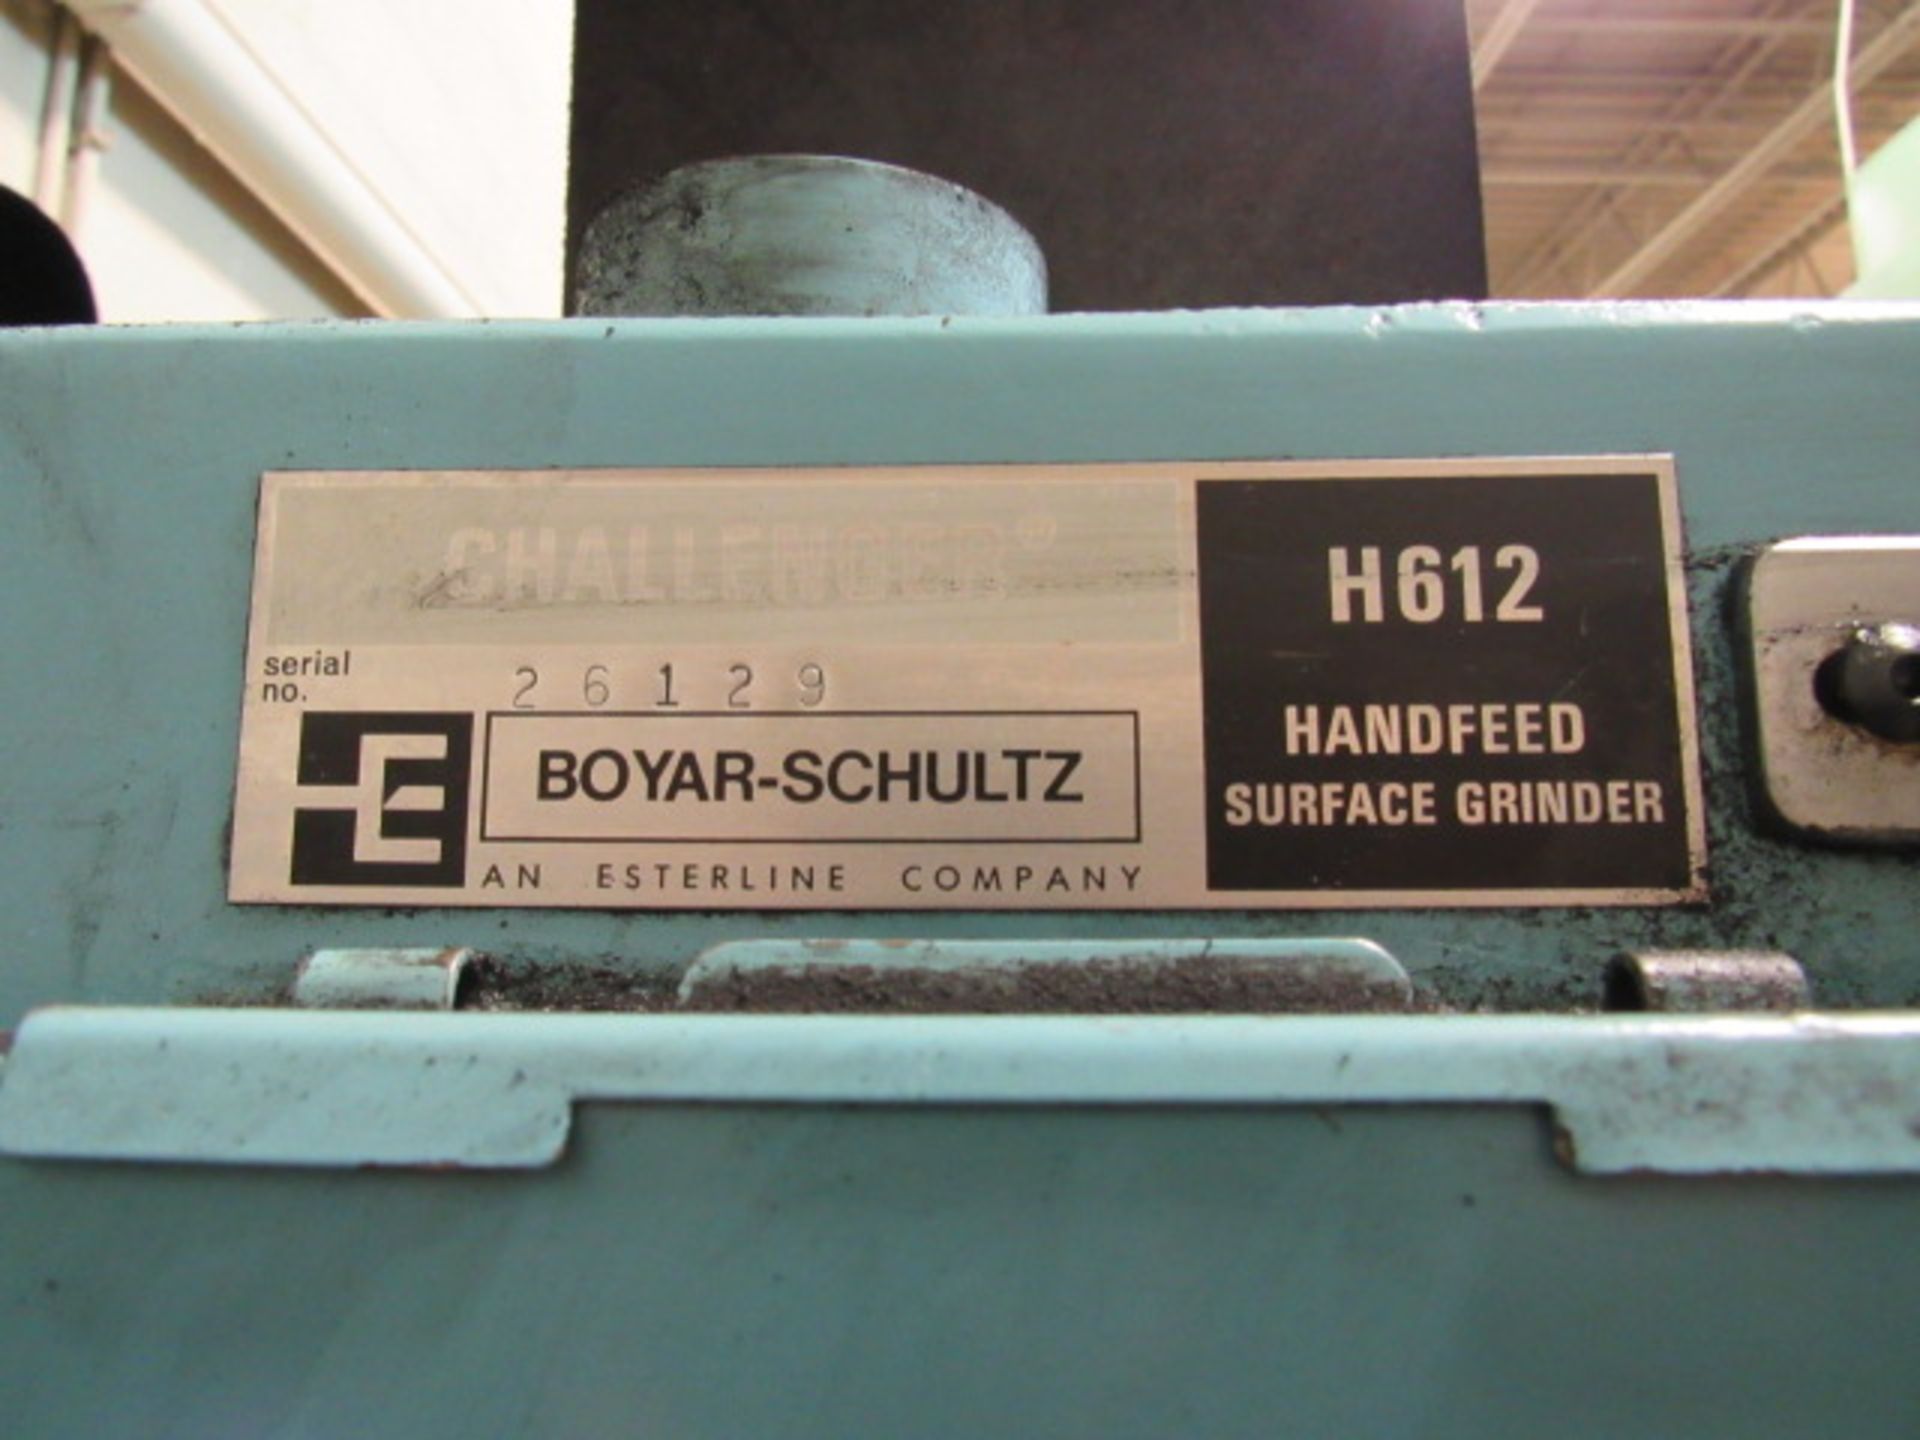 Boyar-Schultz H612 Handfeed Surface Grinder - Image 3 of 4